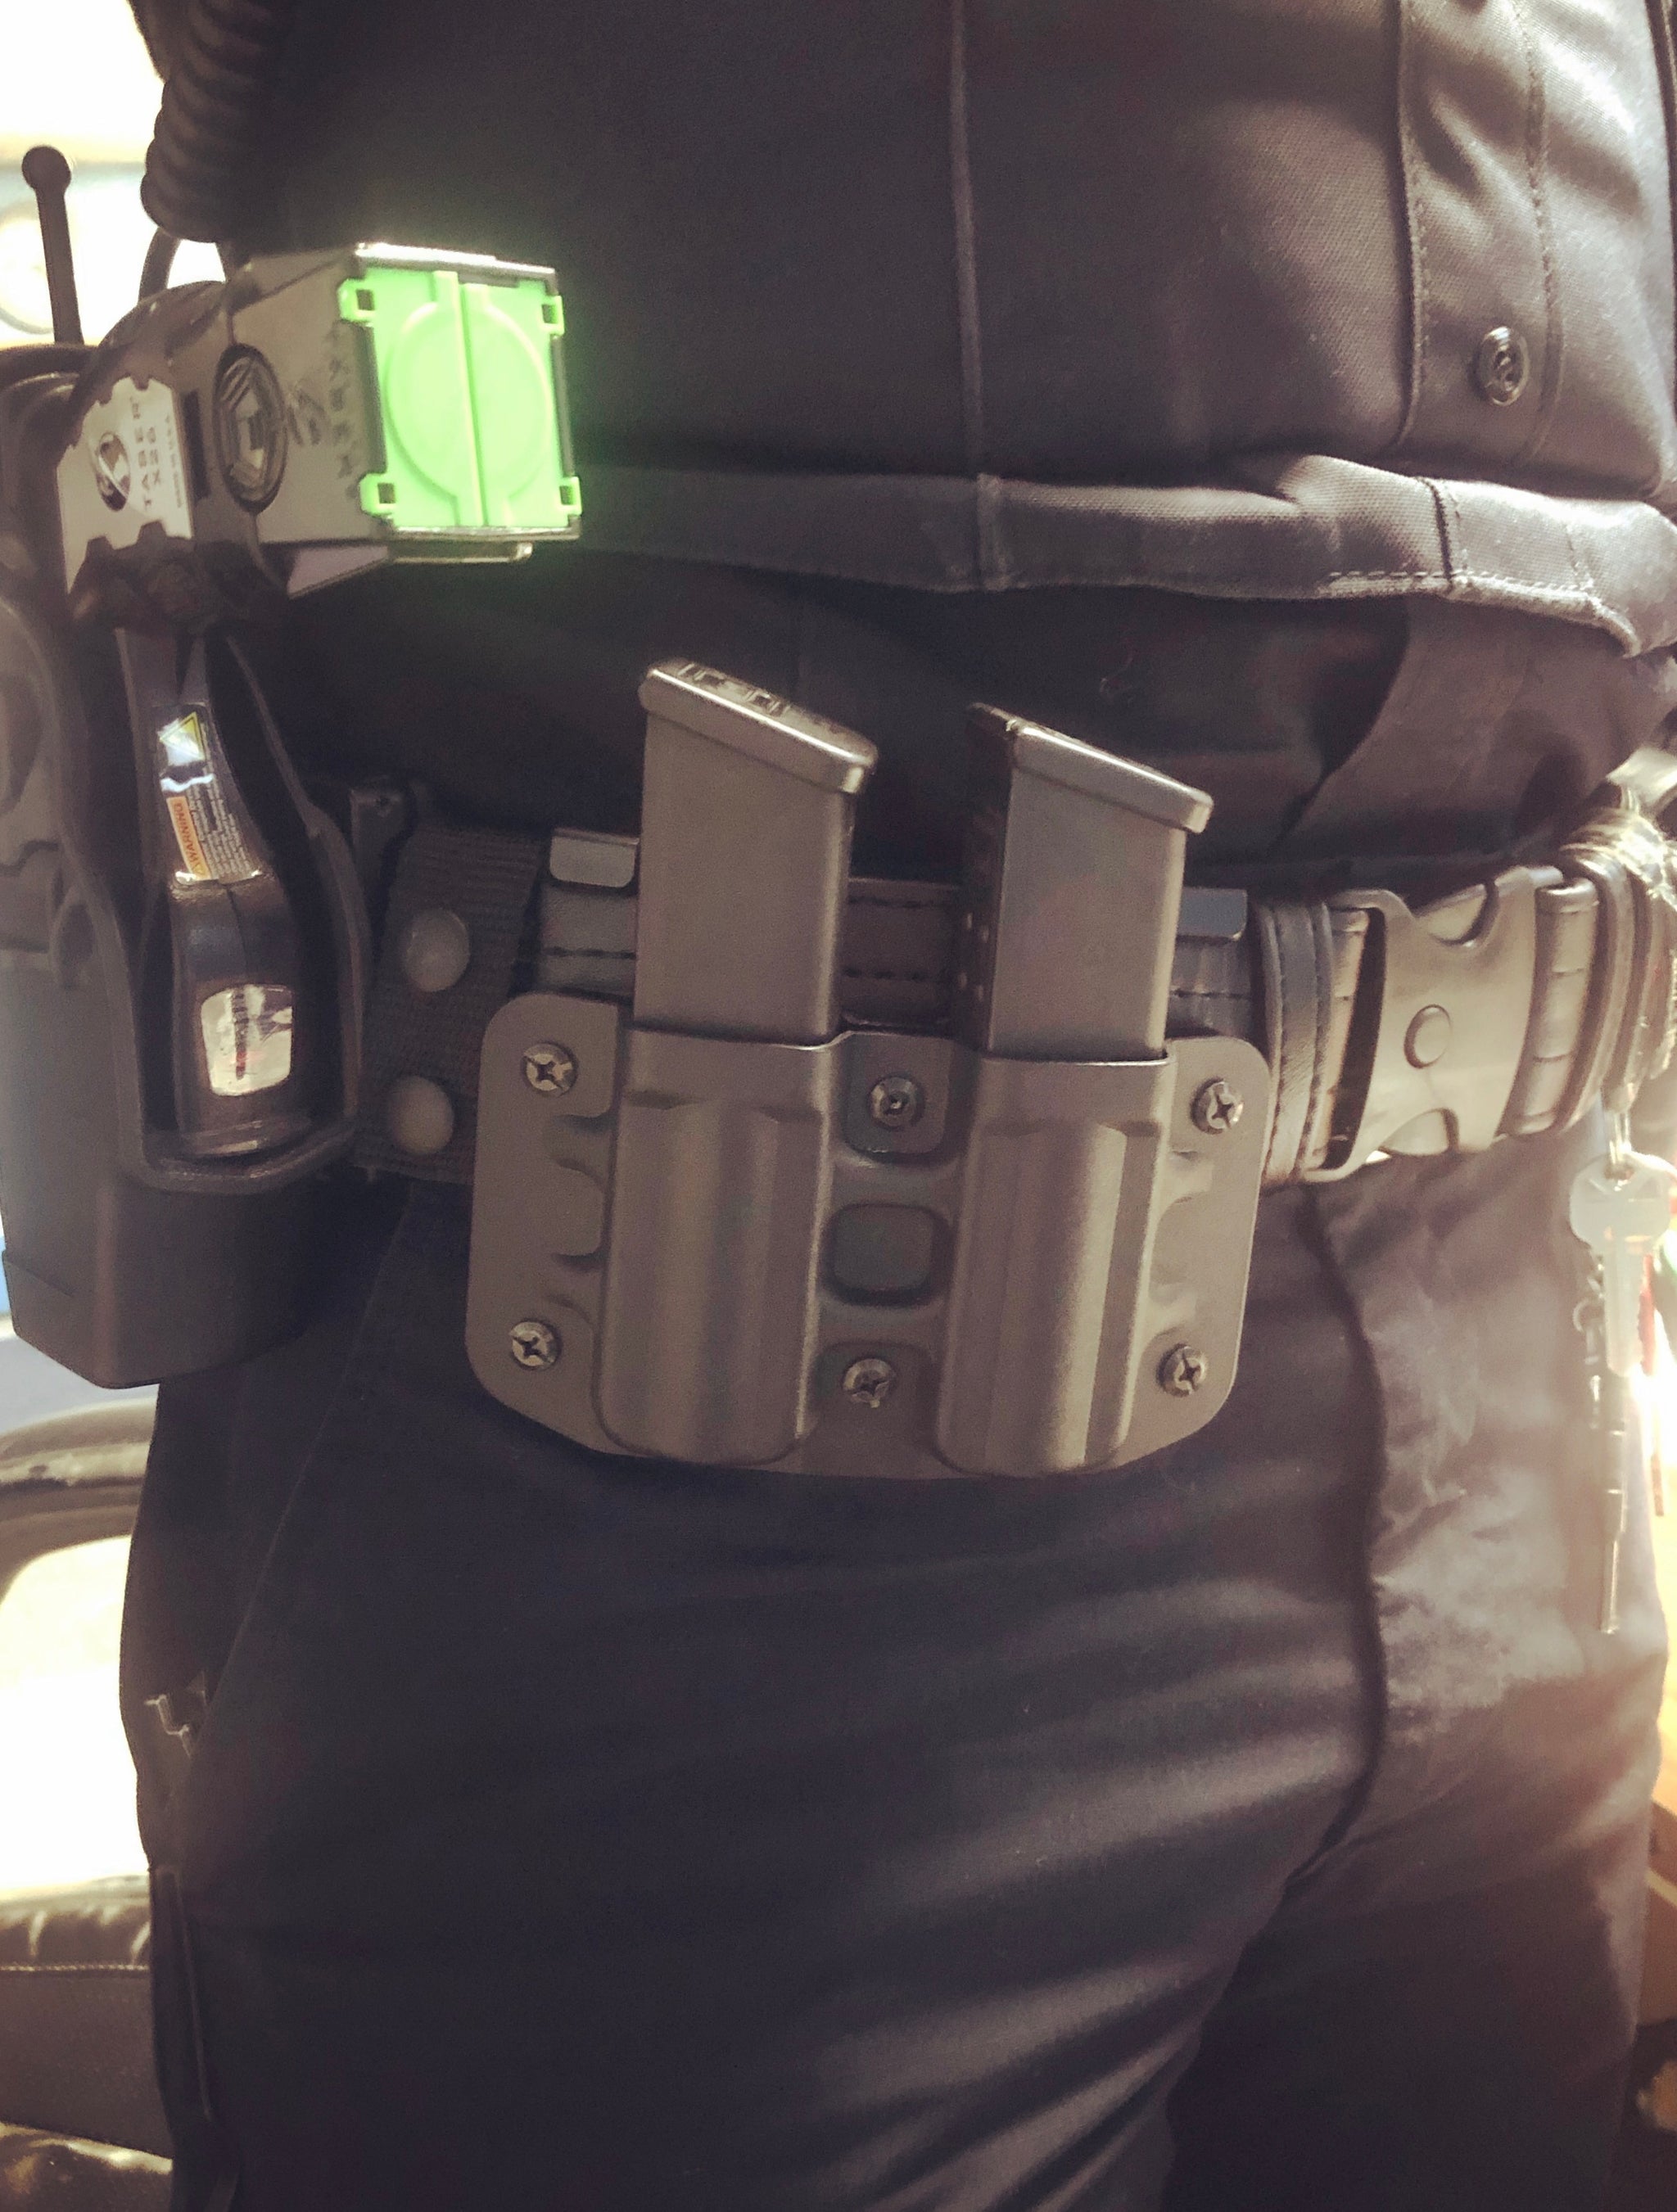 police duty belt magazine pouch, flashlight carrier, baton, oc spray holder